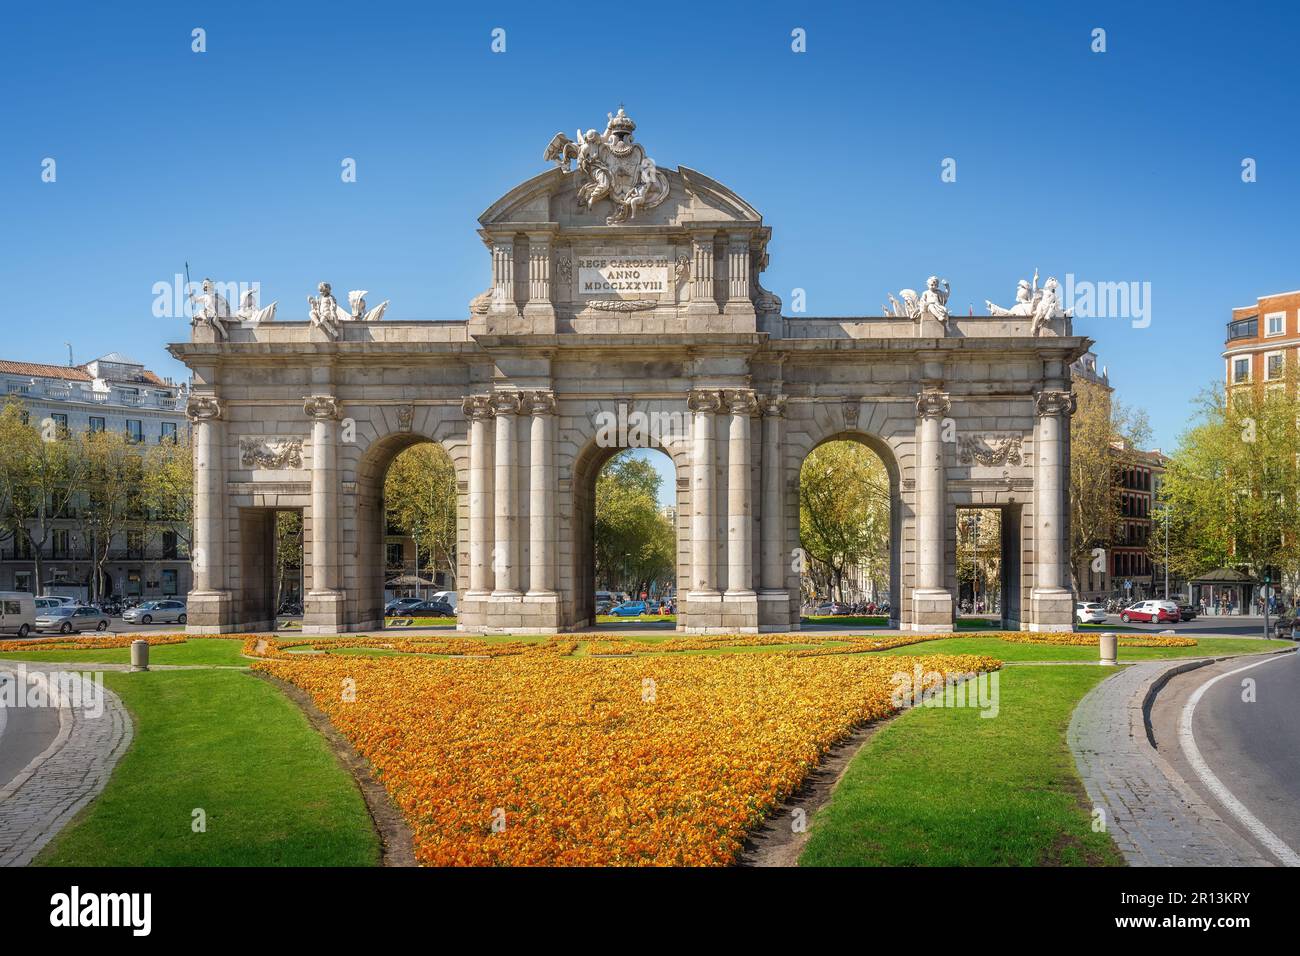 Puerta de Alcala - Madrid, Spain Stock Photo